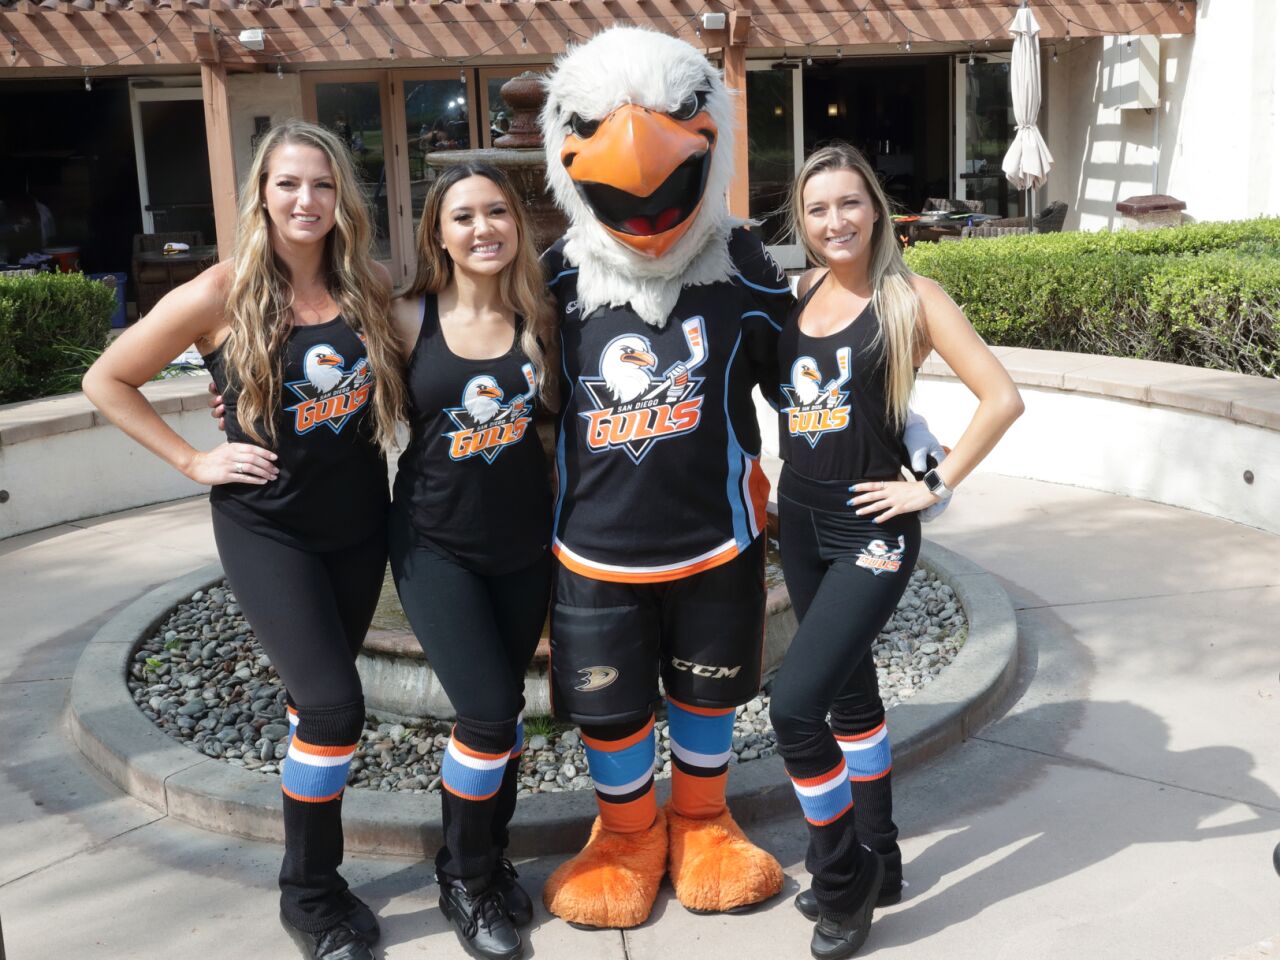 The Gulls mascot "Gulliver" with the Gulls Girls